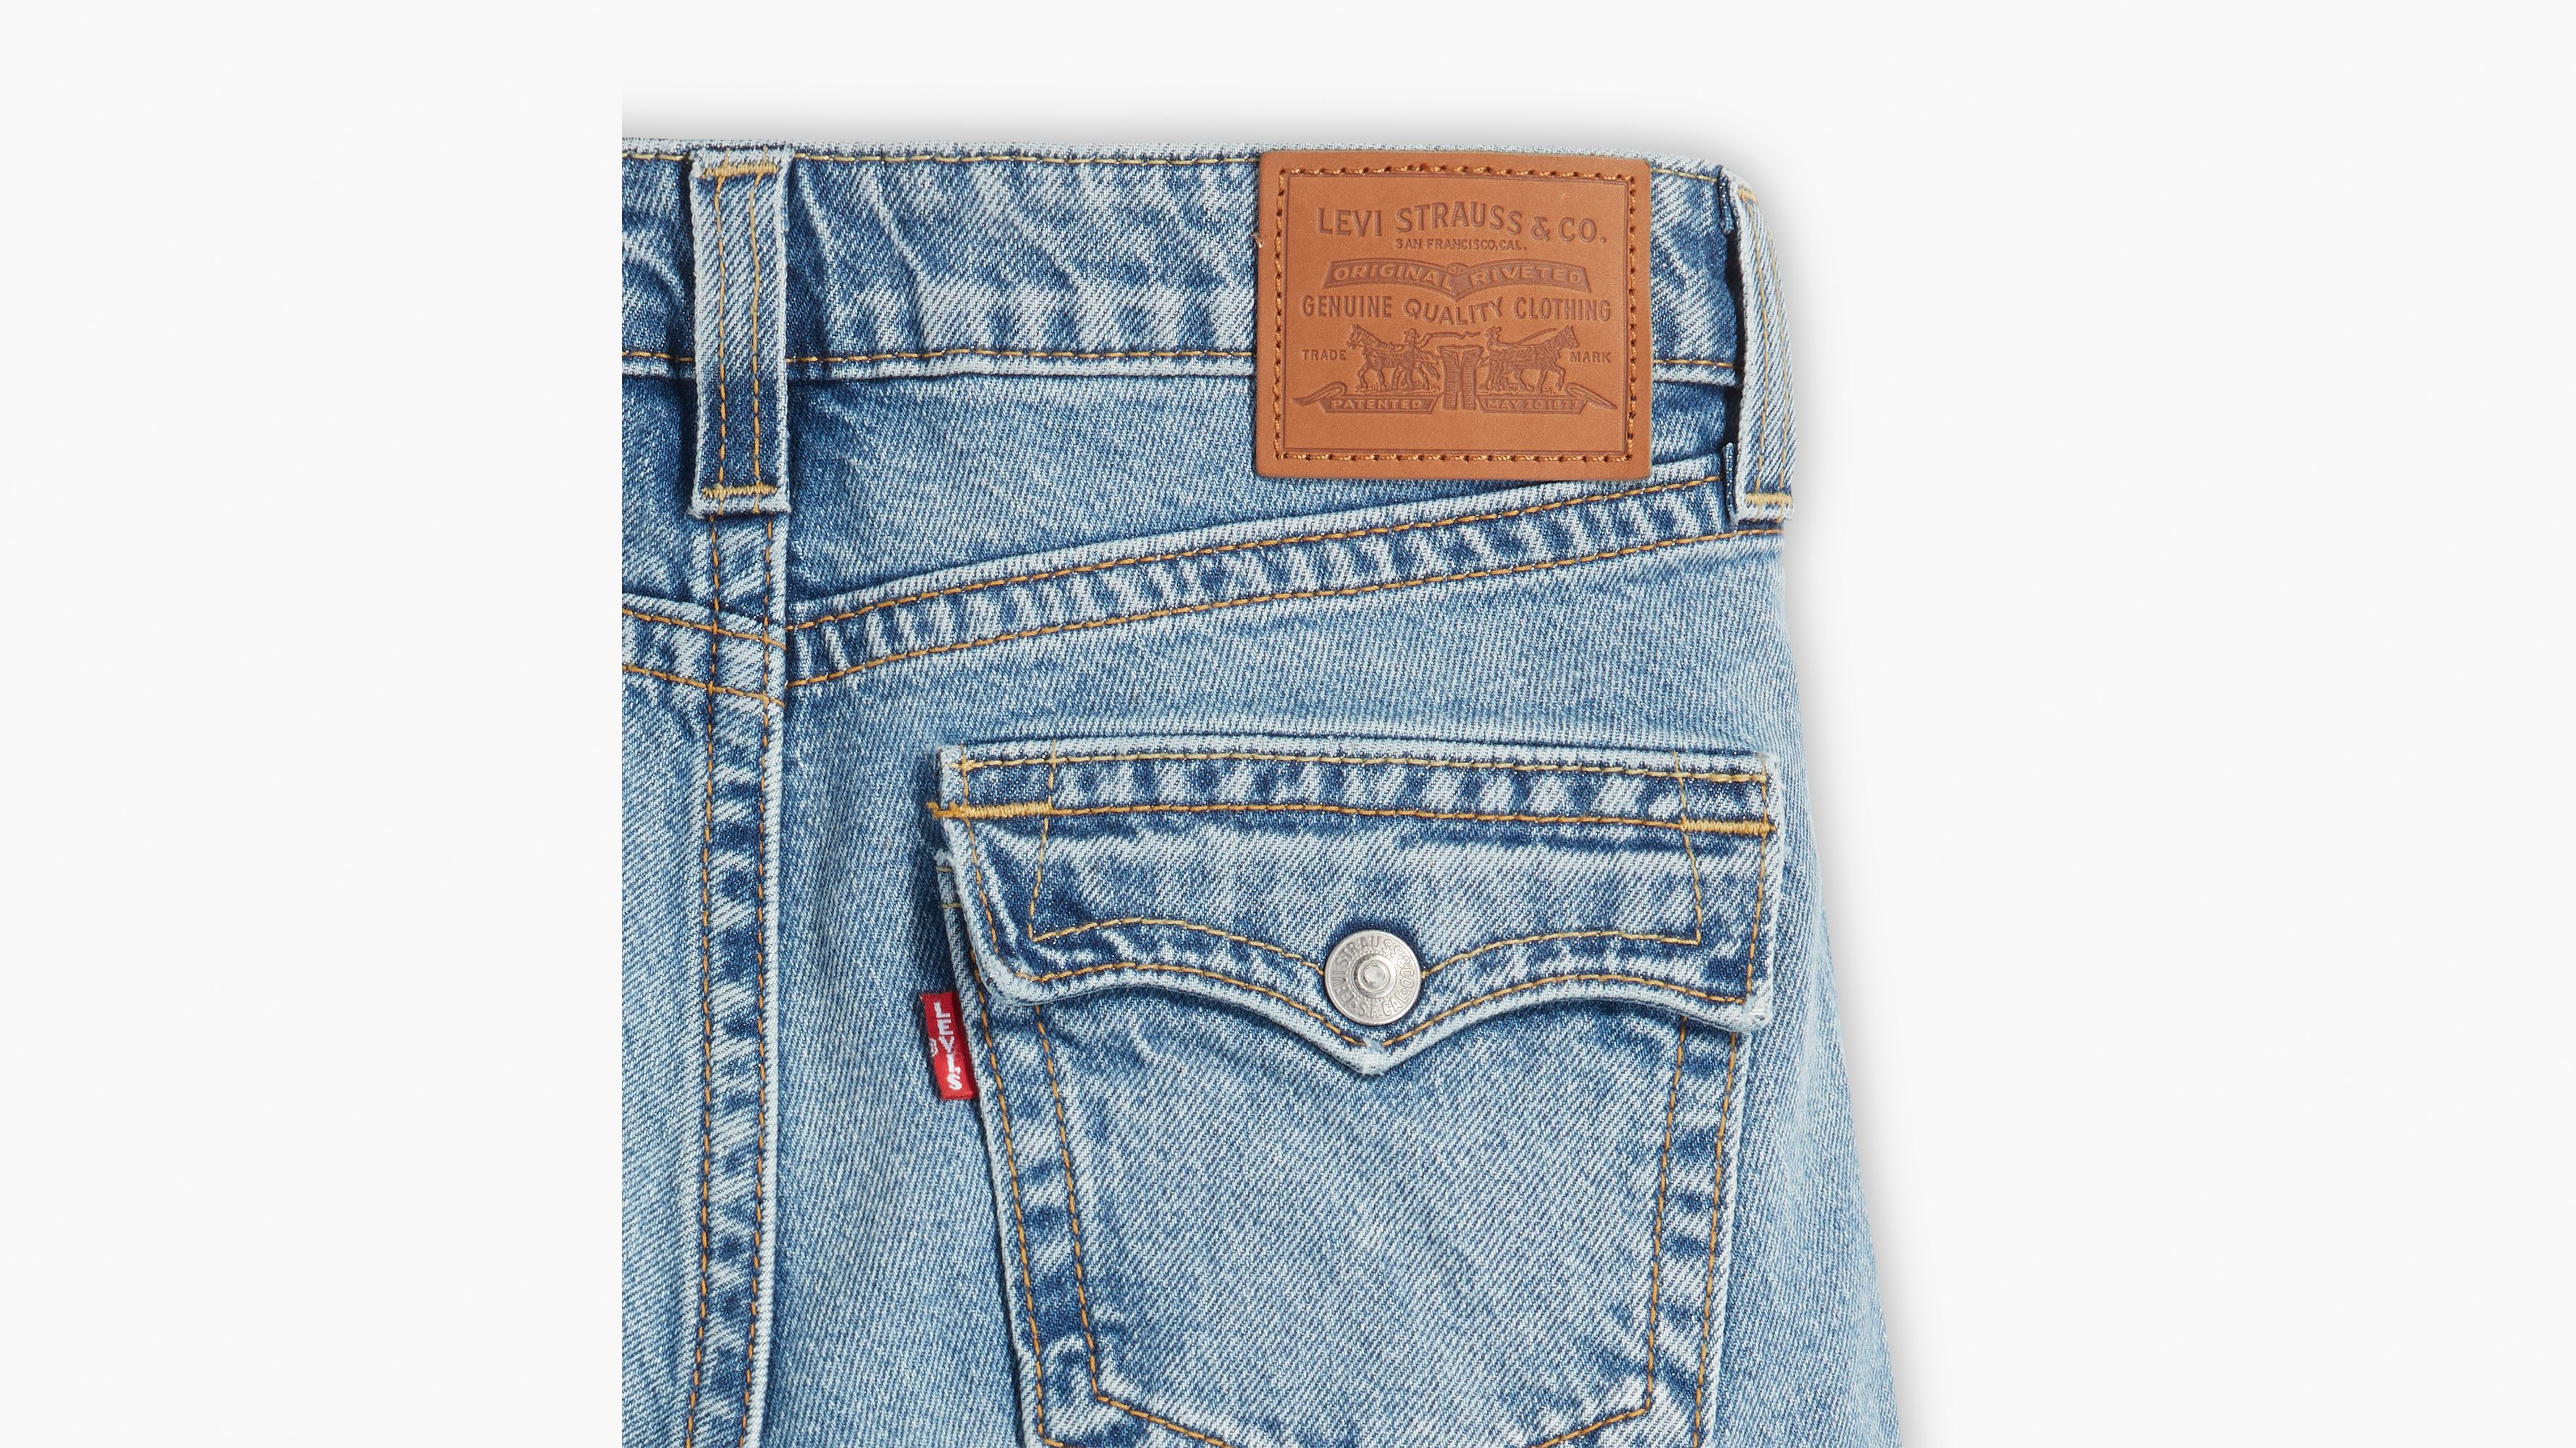 Noughties Bootcut Pinstripe Women's Jeans - Medium Wash